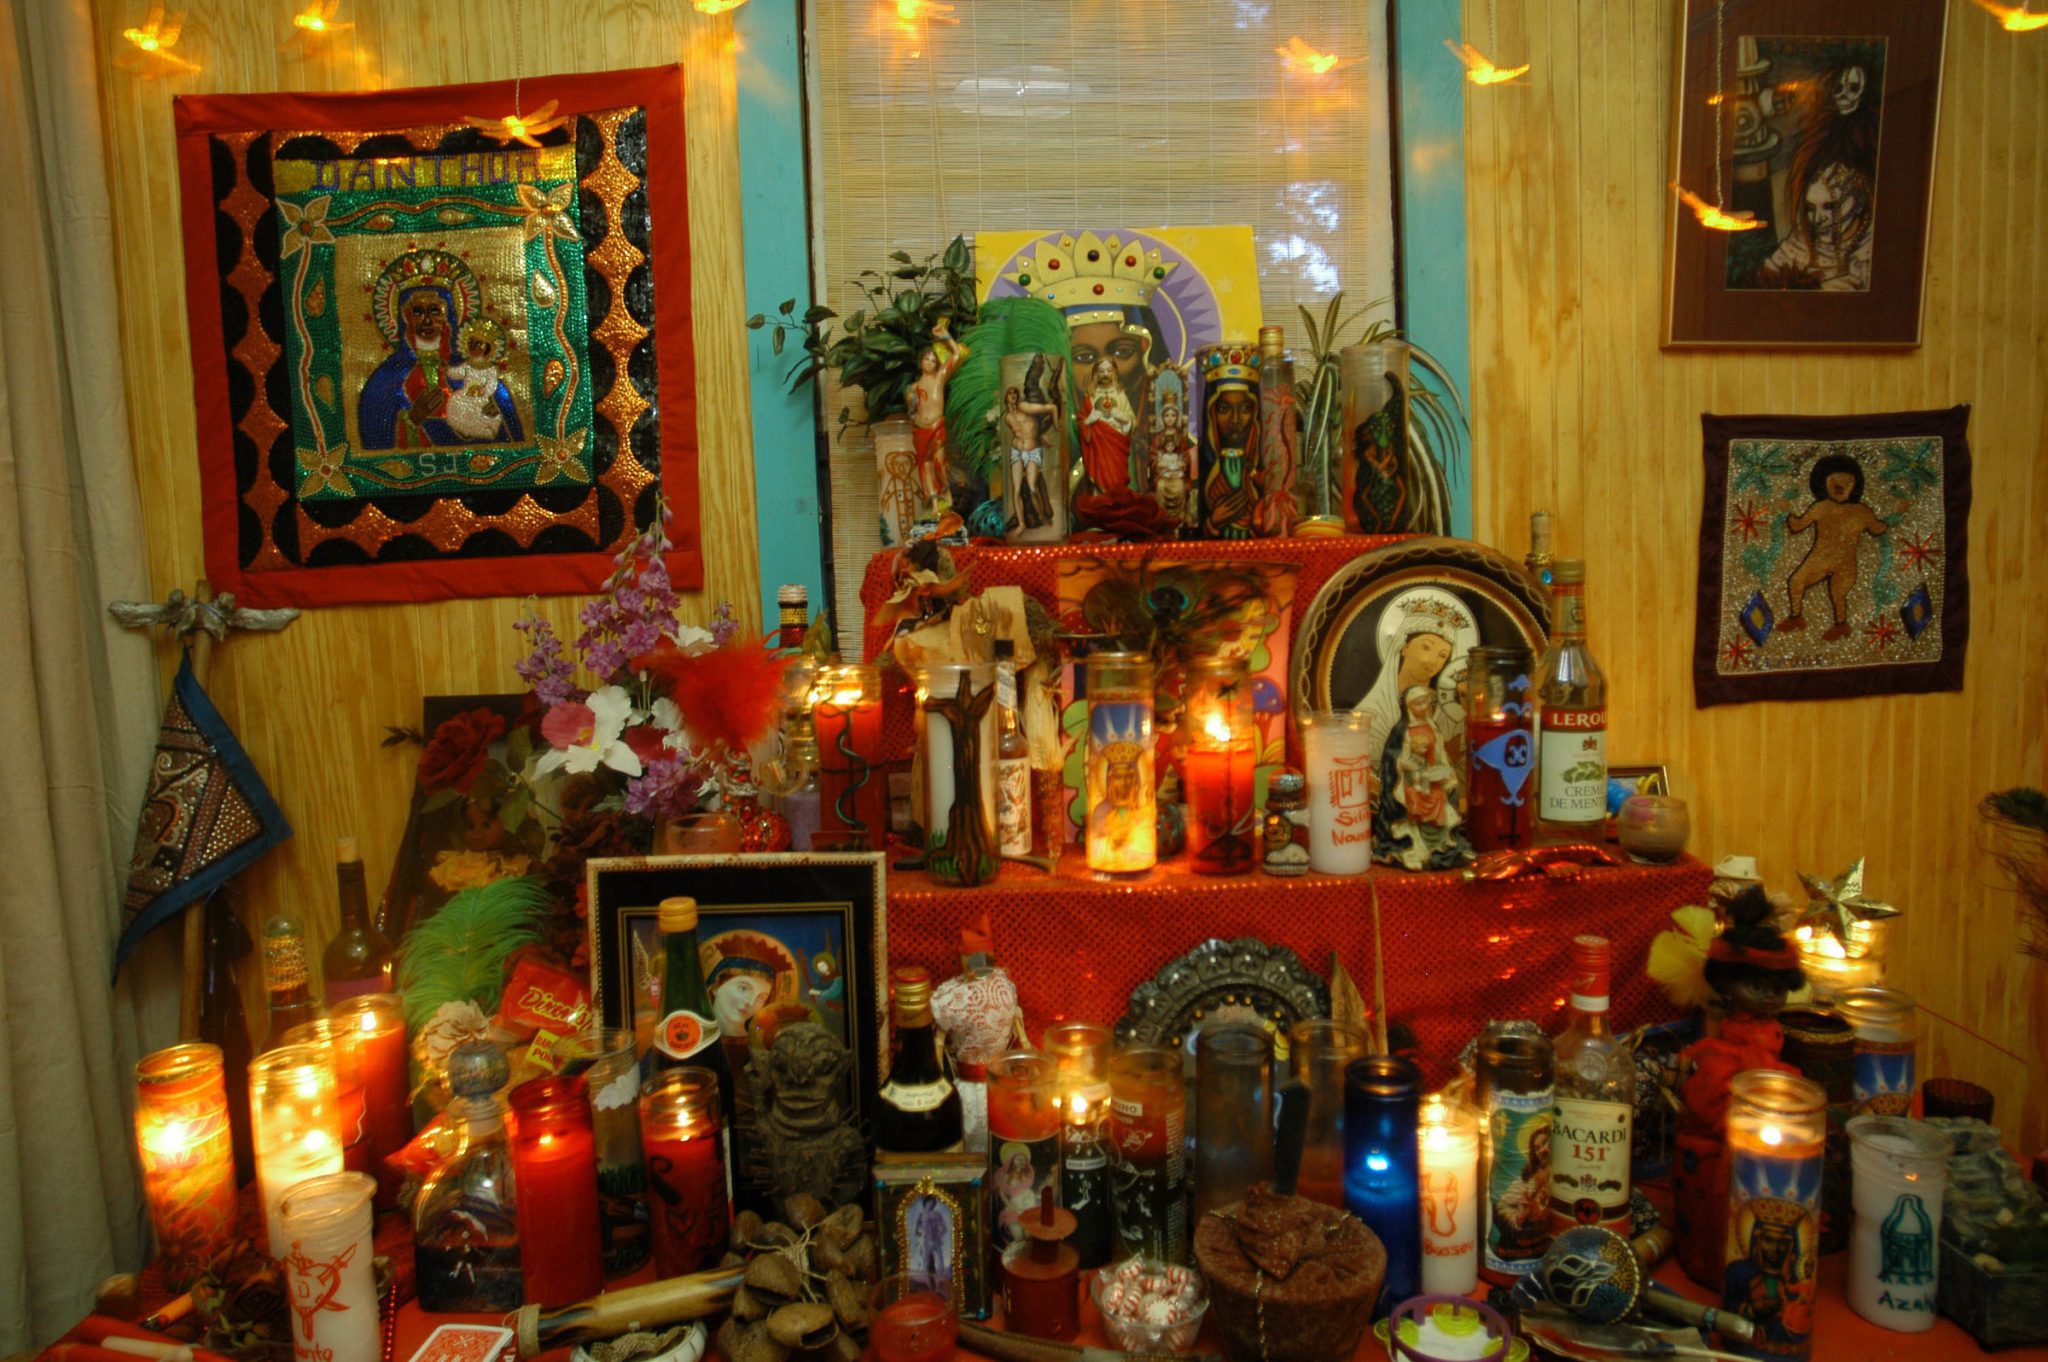 voodoo altar items